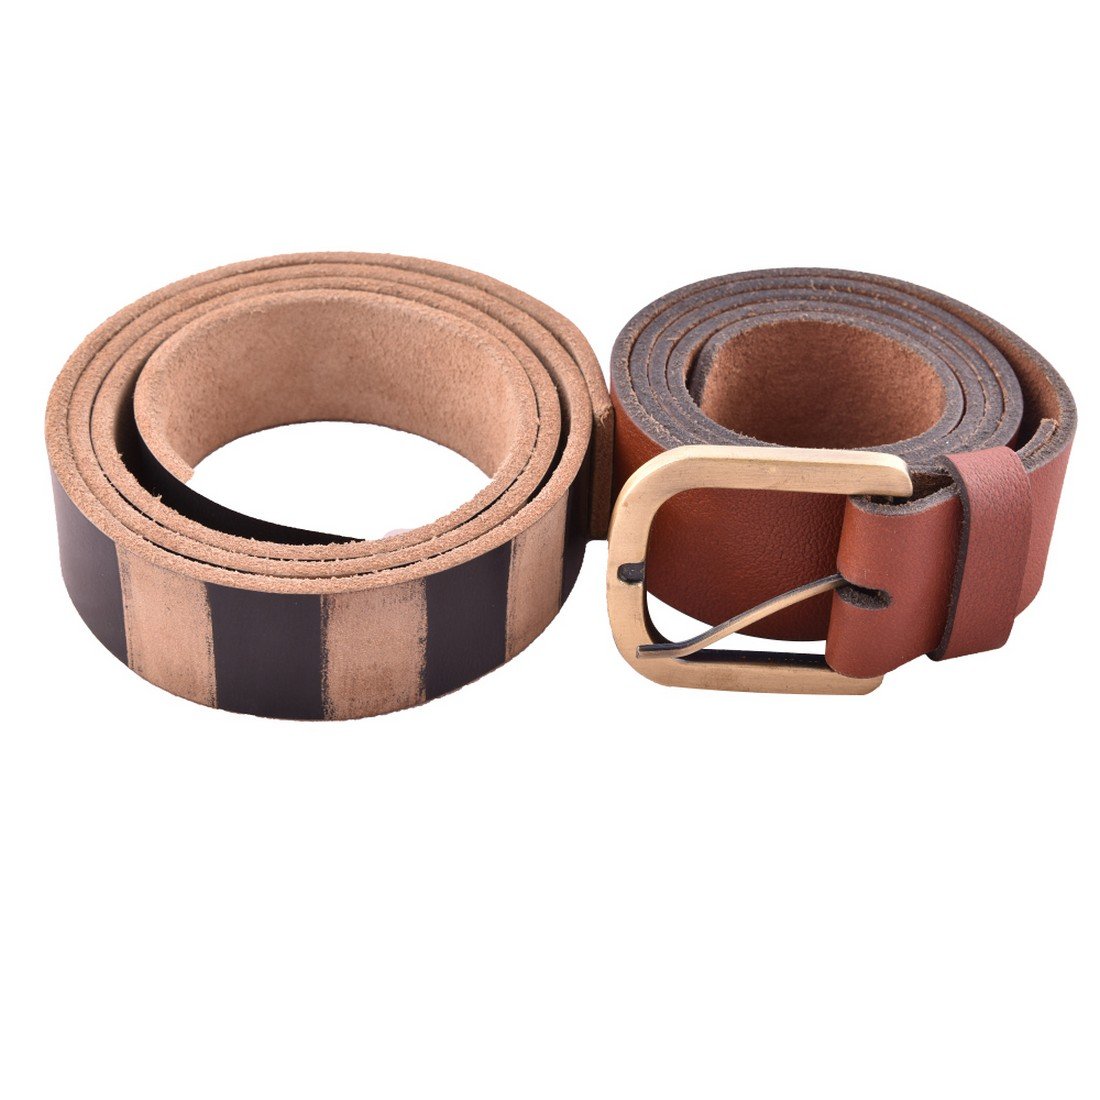 buy brown belt